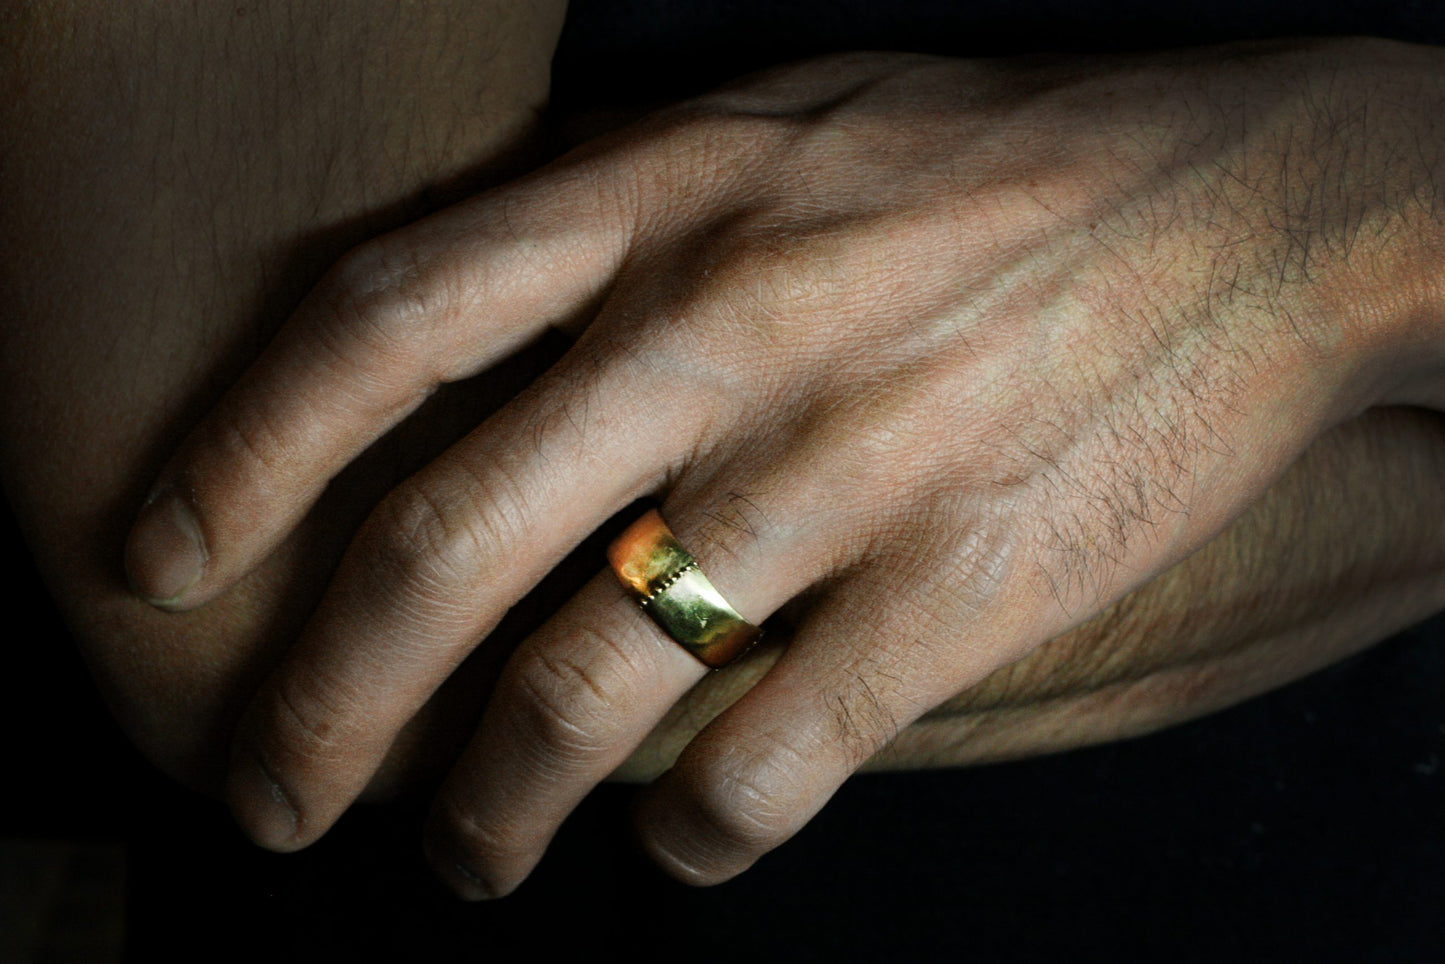 Julian Granulated Wedding Rings